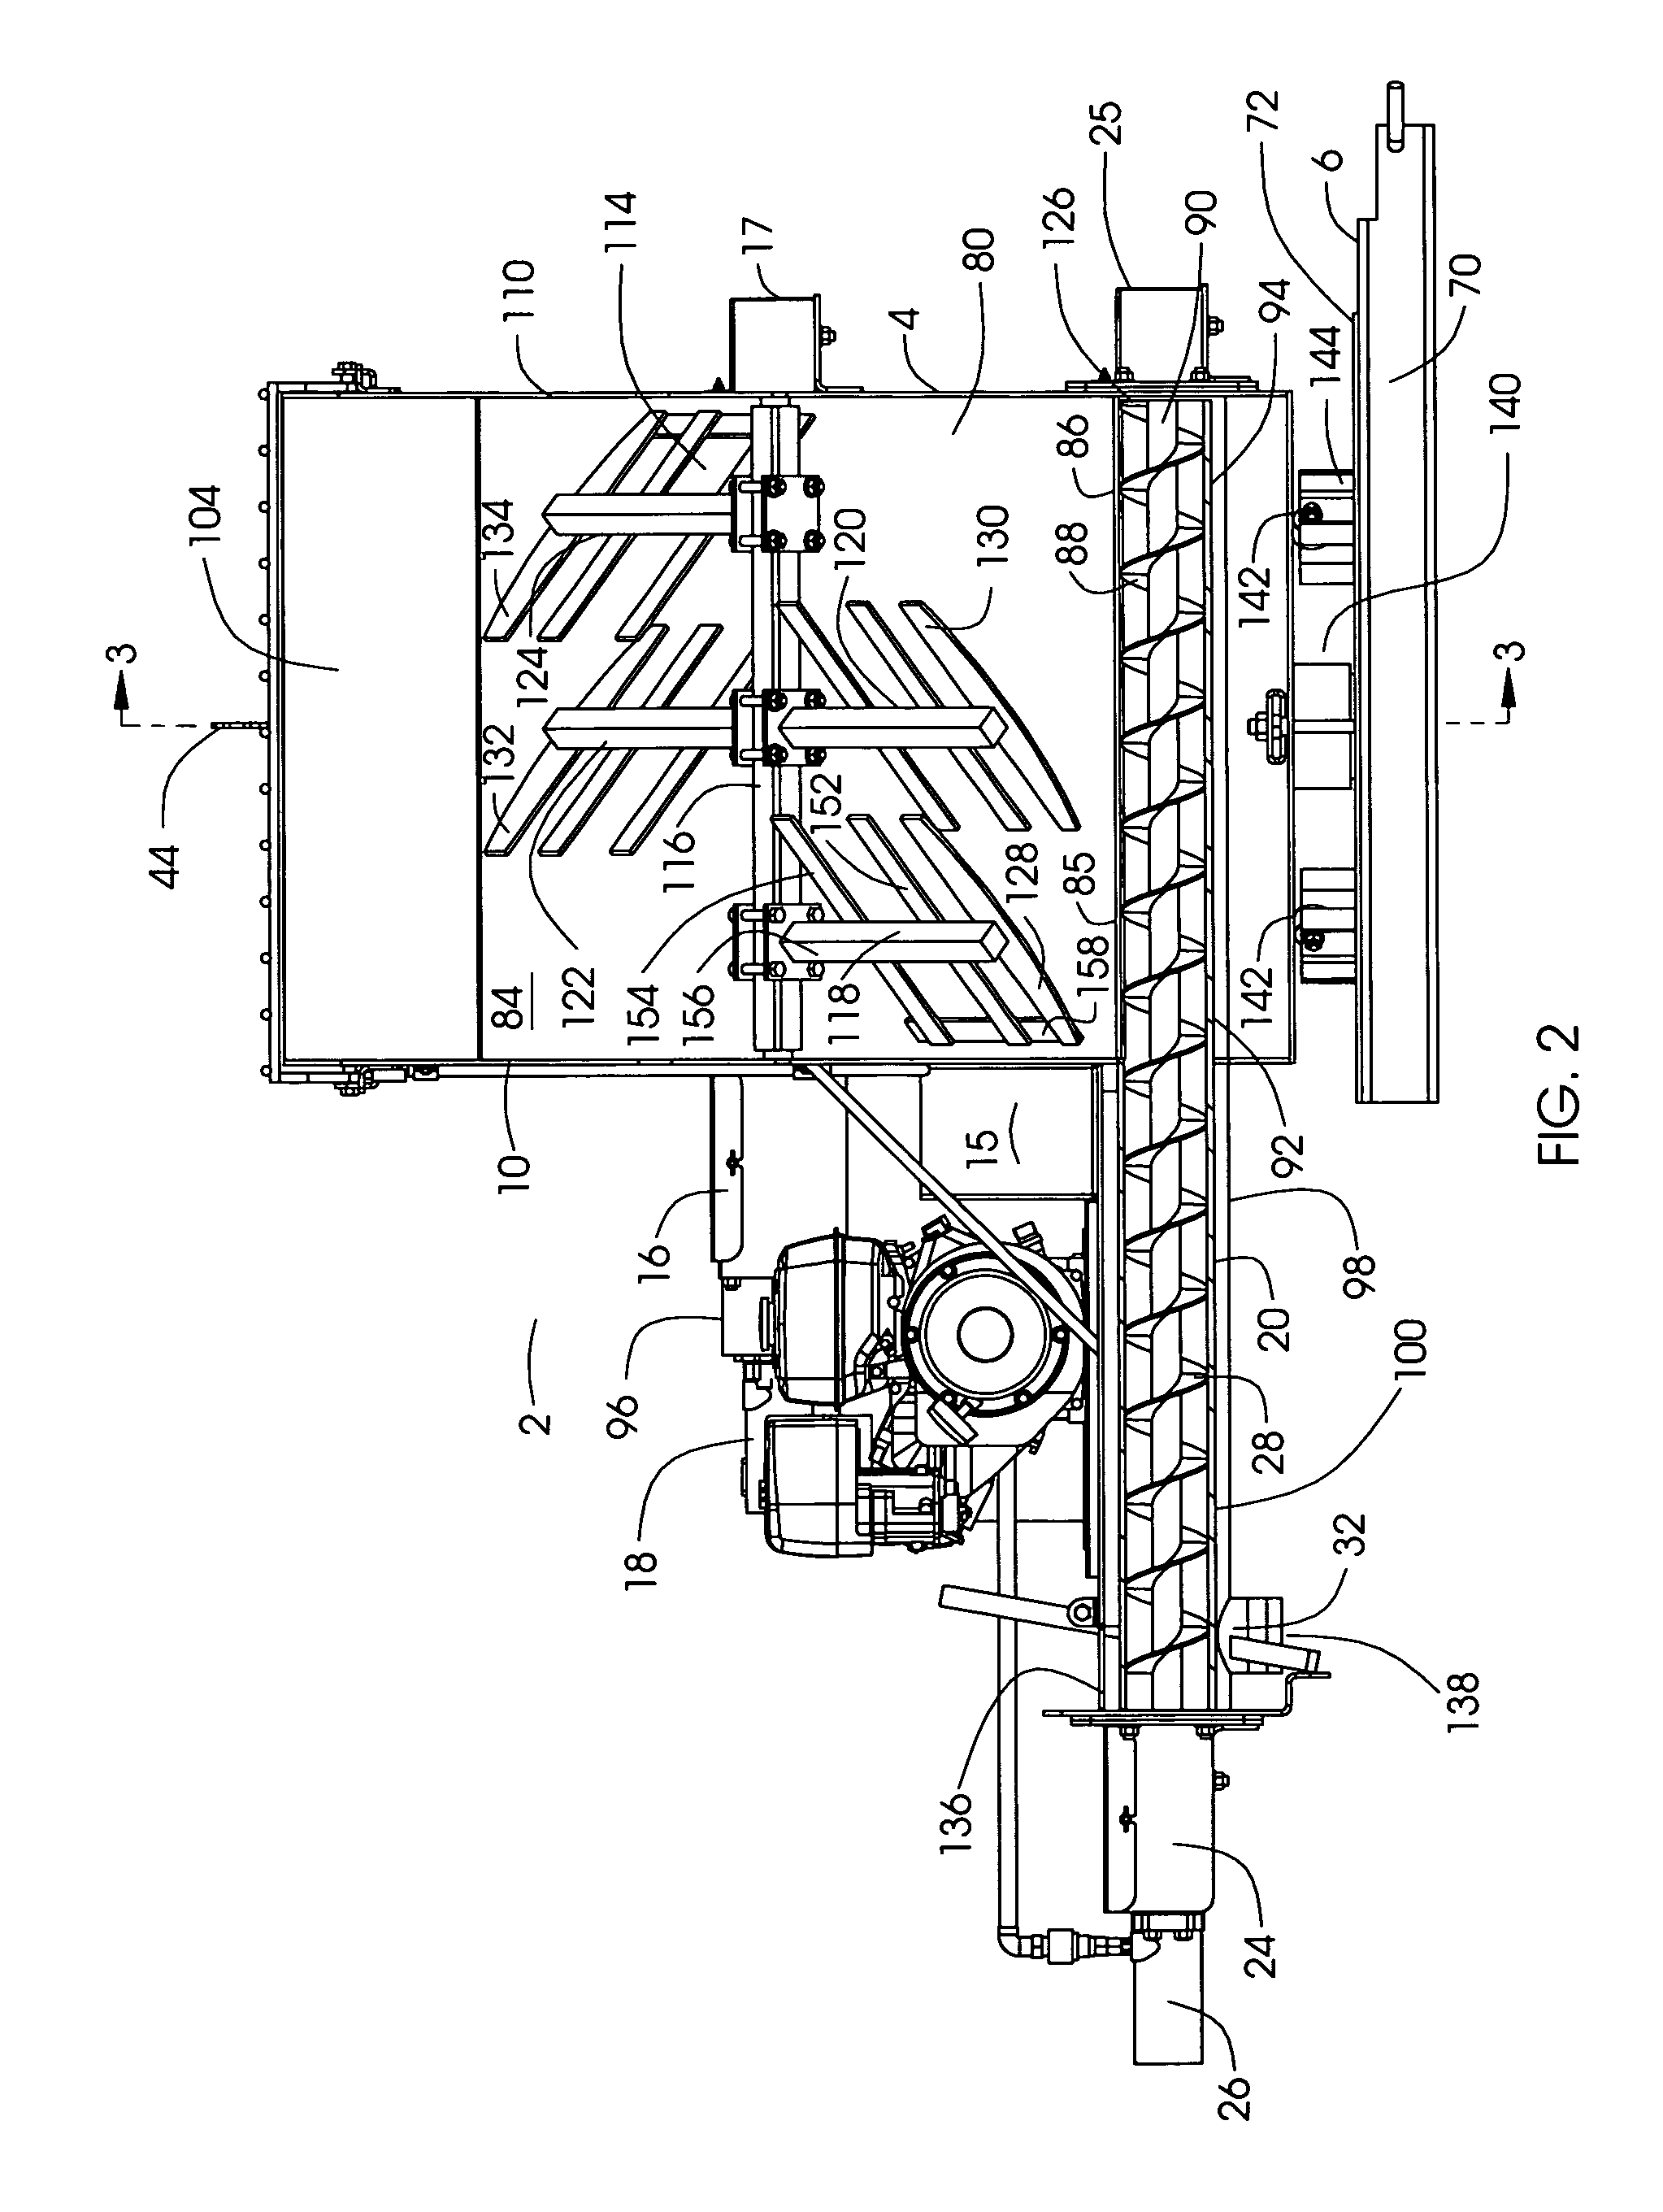 Mortar mixing apparatus